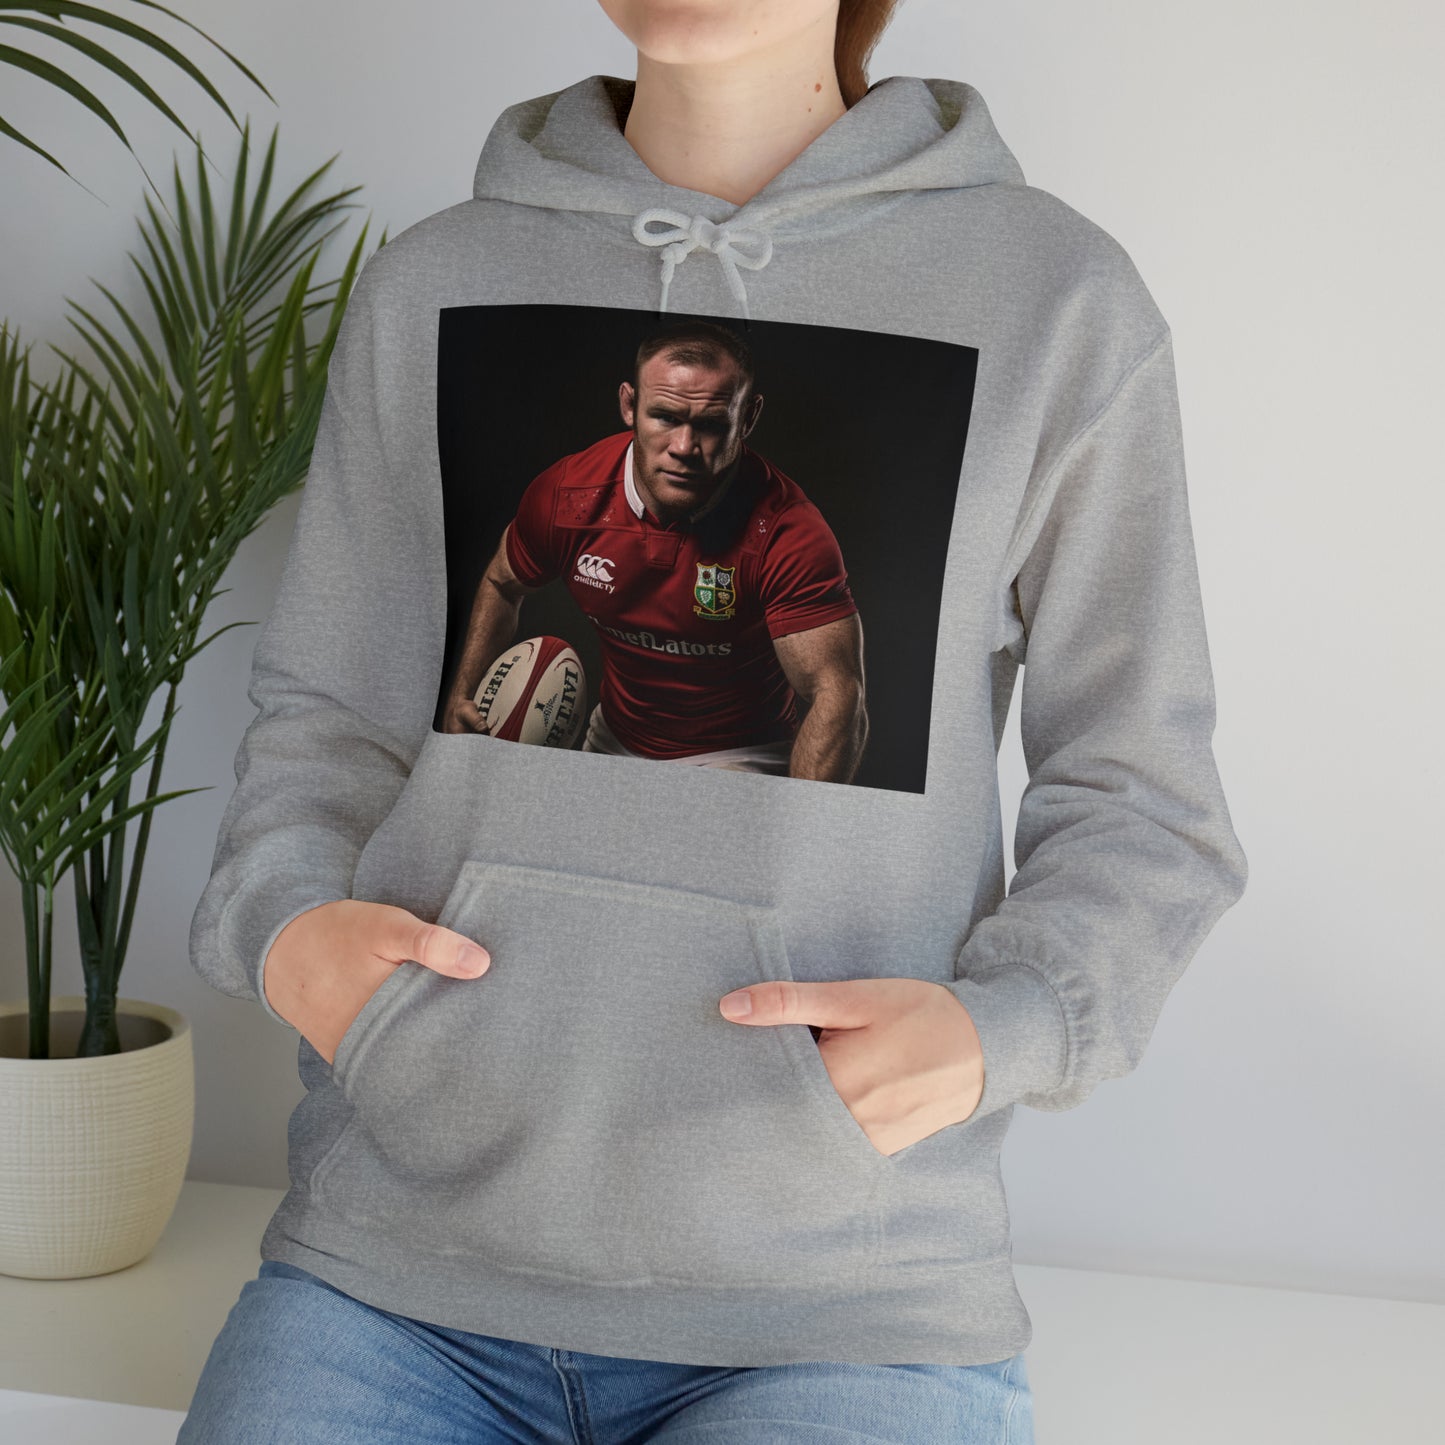 Ready Rooney - light hoodies